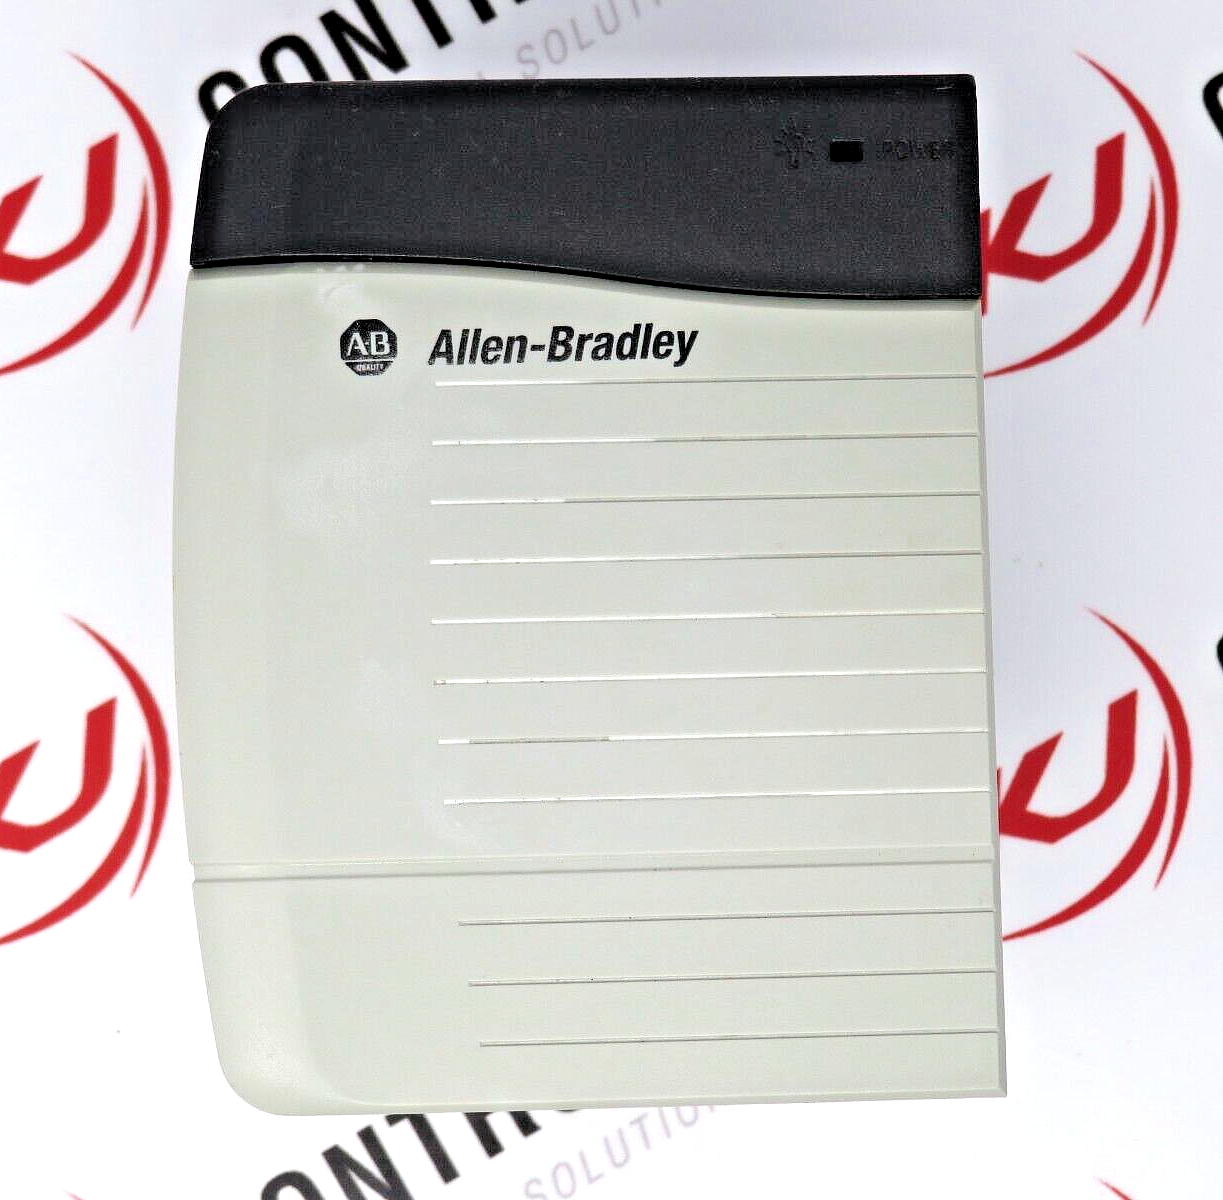 Allen-Bradley ControlLogix 1756-PB72 24V Standard DC Power Supply